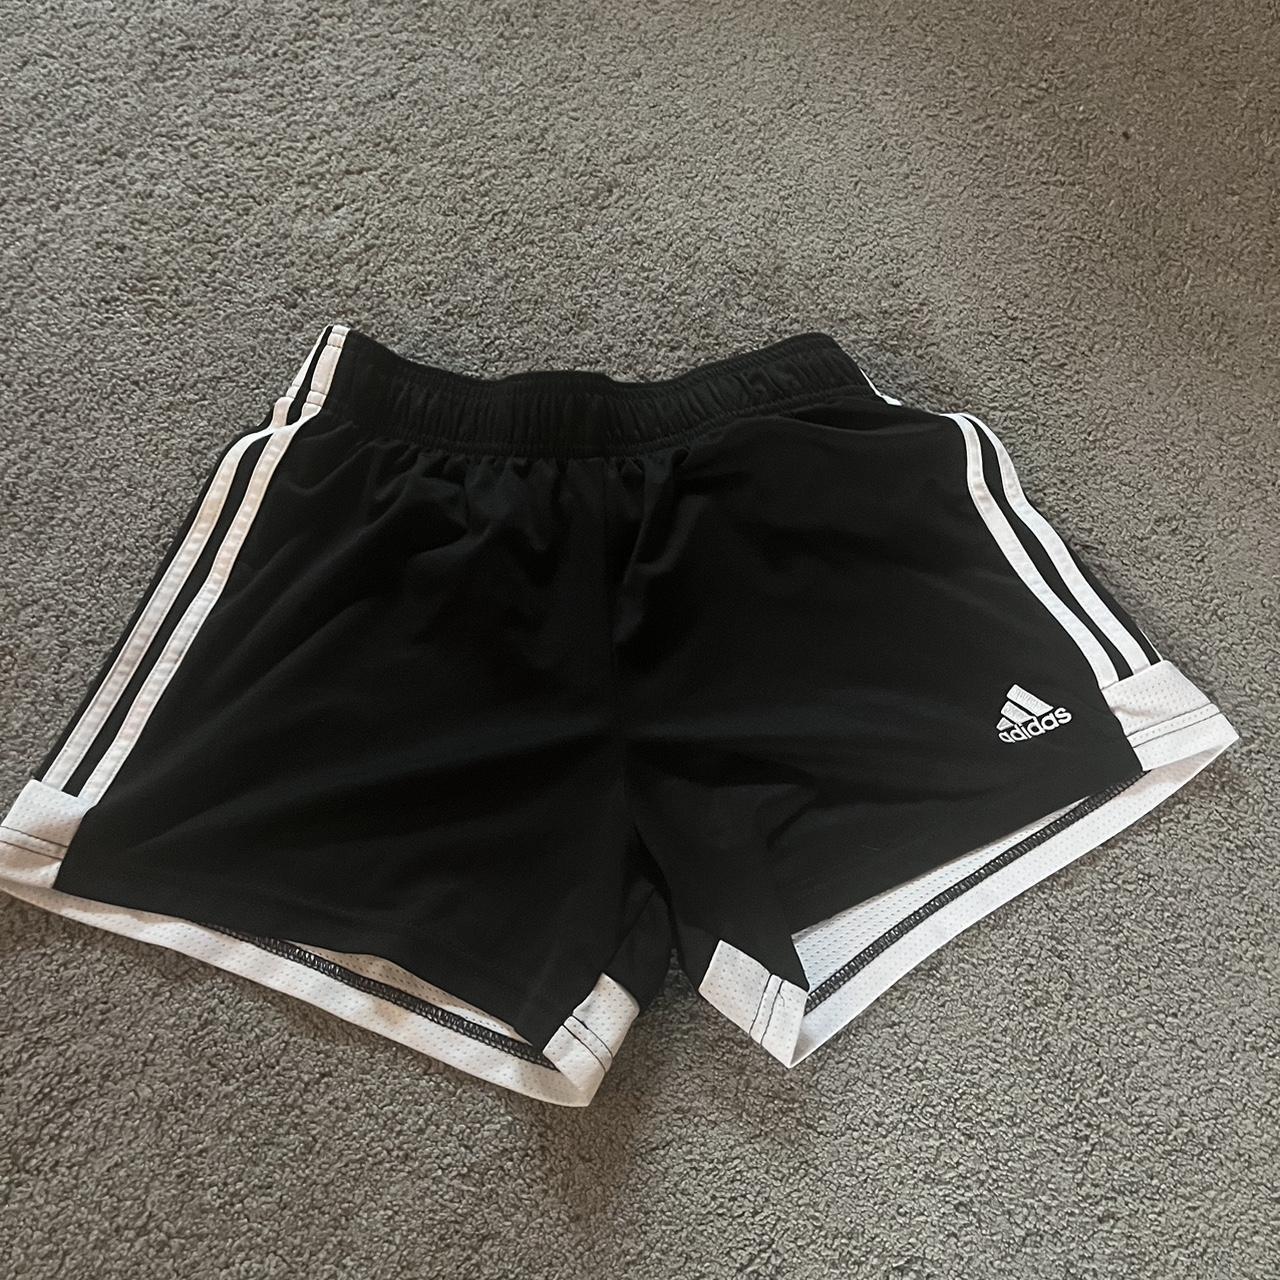 Adidas Workout Shorts Super flattering, booty - Depop